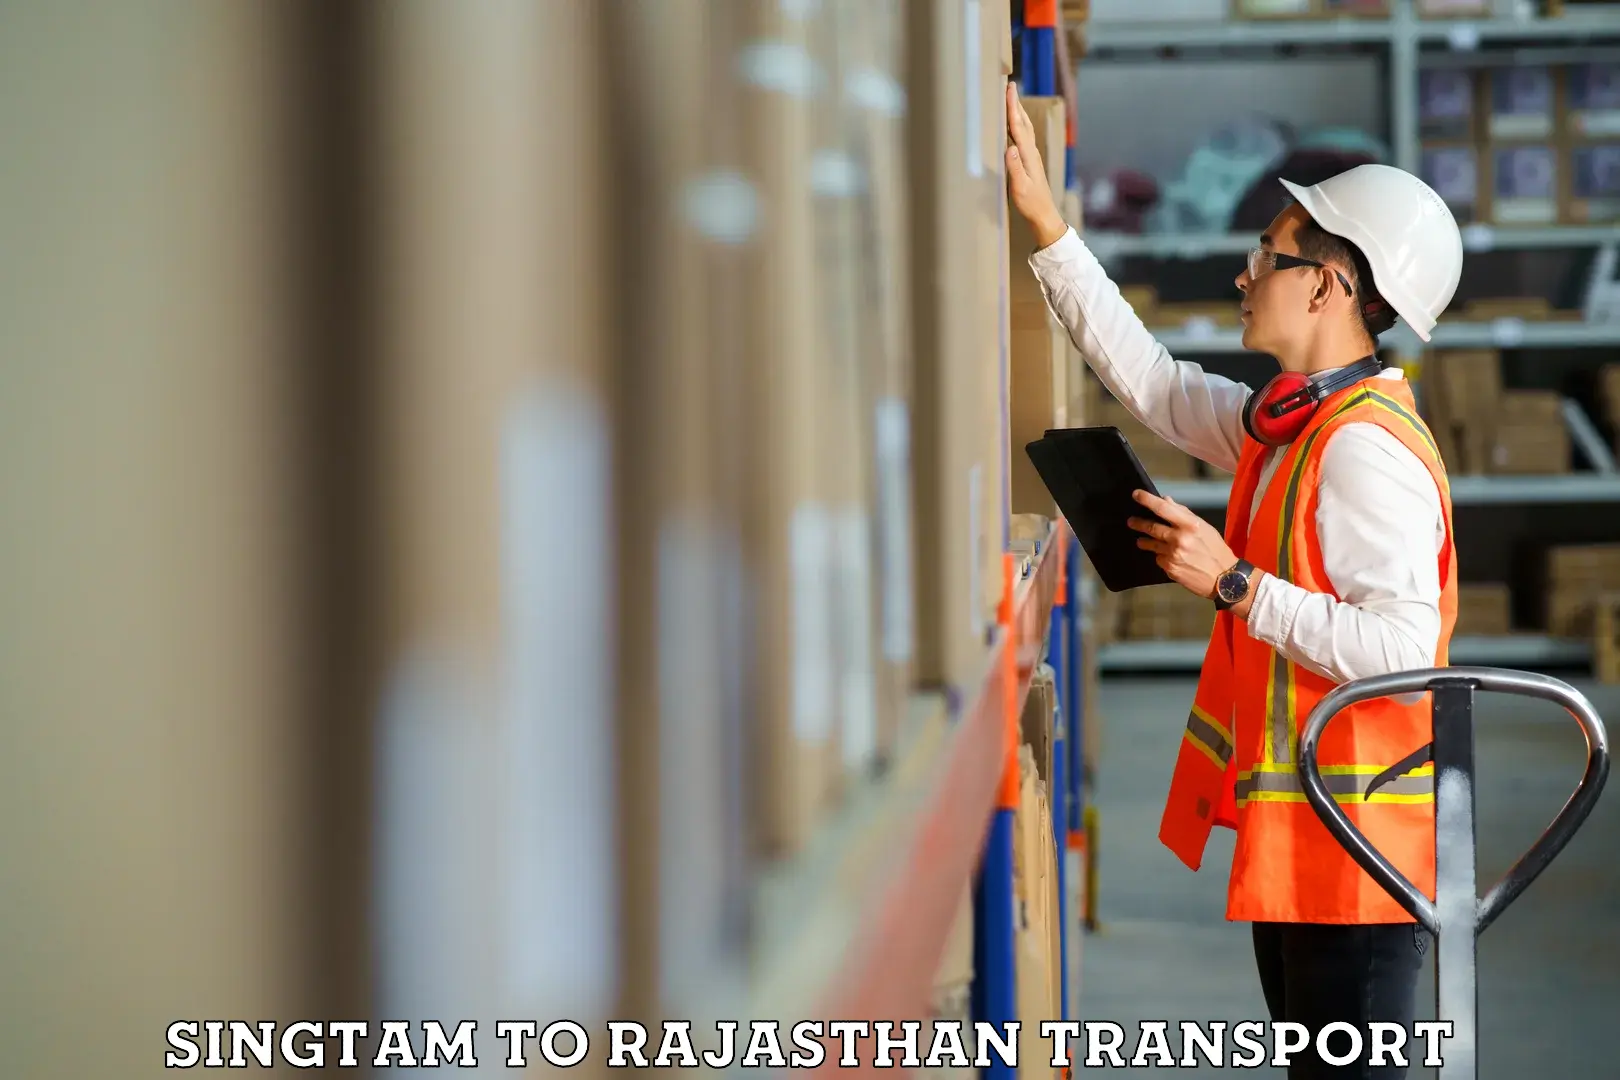 Daily transport service Singtam to Rajasthan